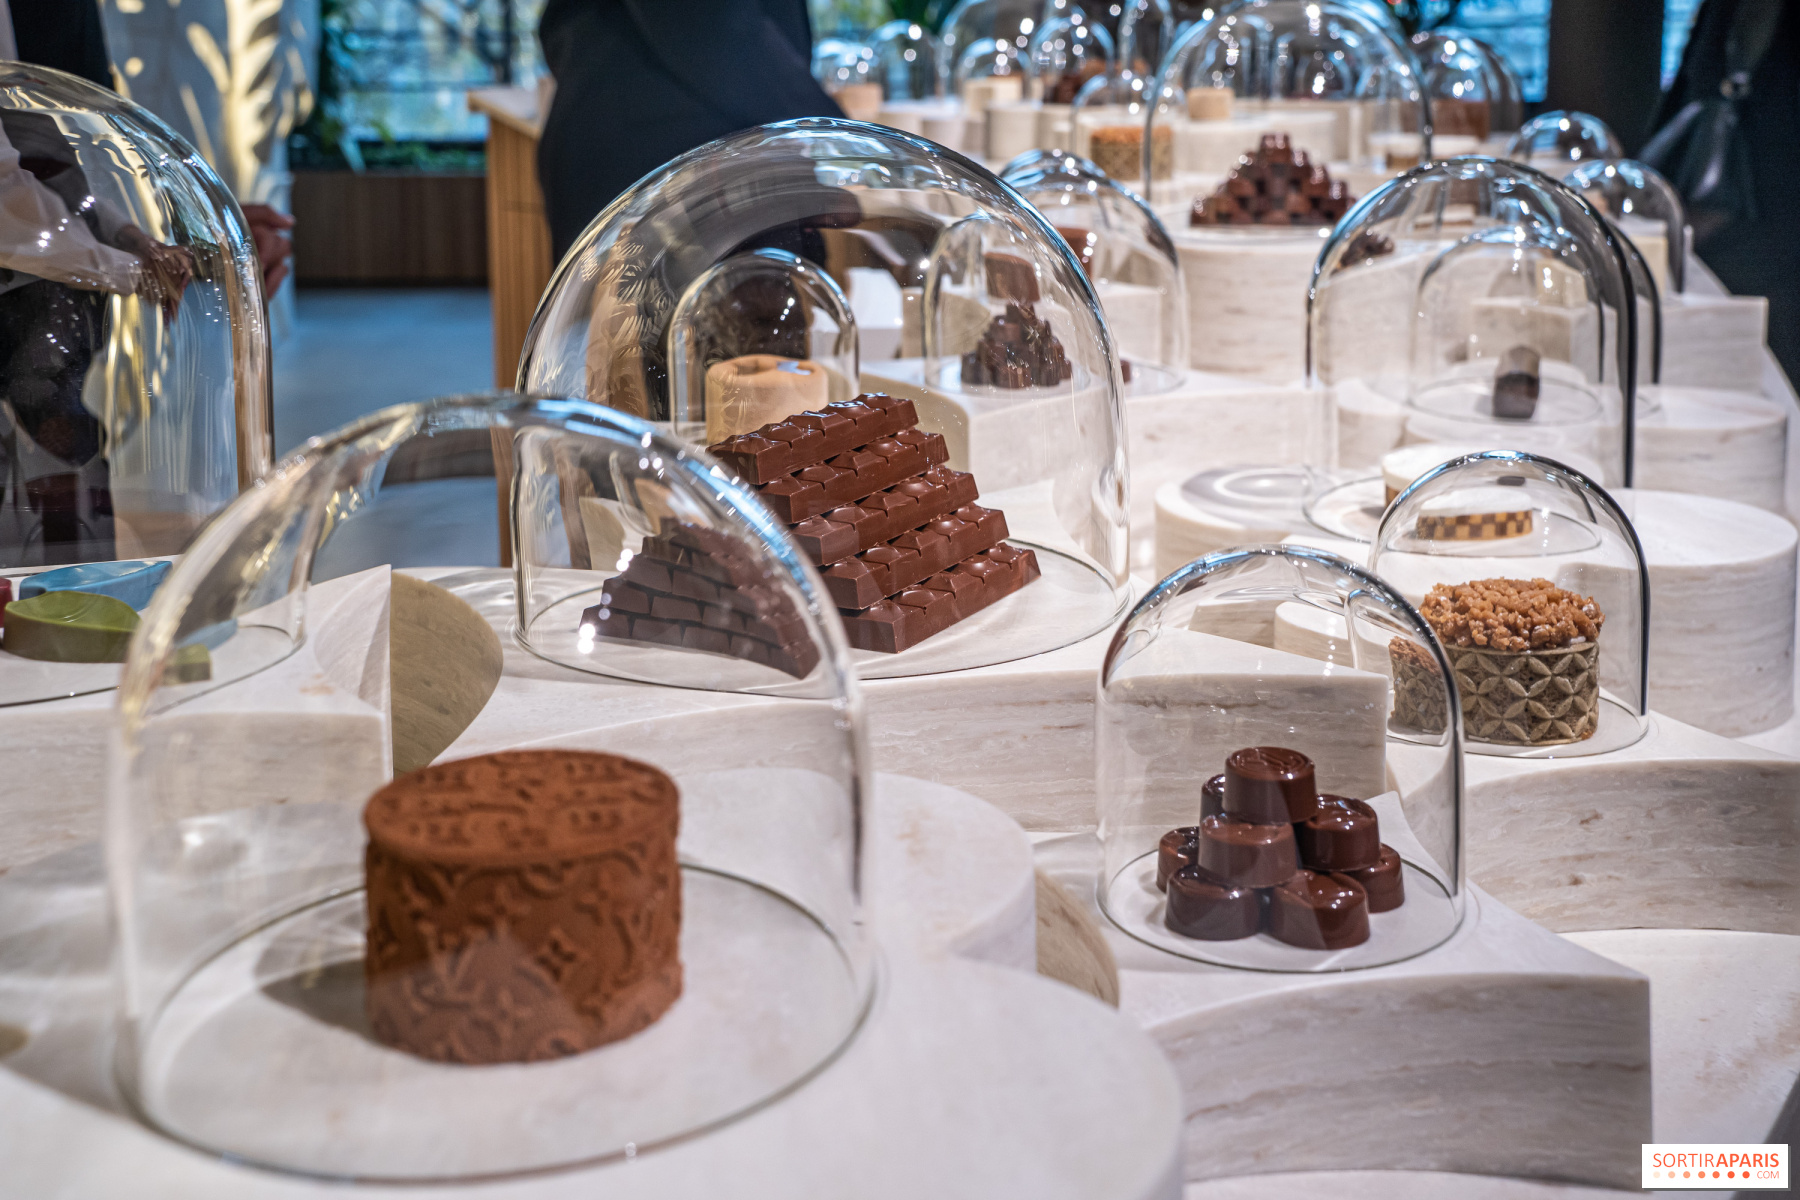 LV Dream - the latest café and chocolate store by Maxime Frédéric